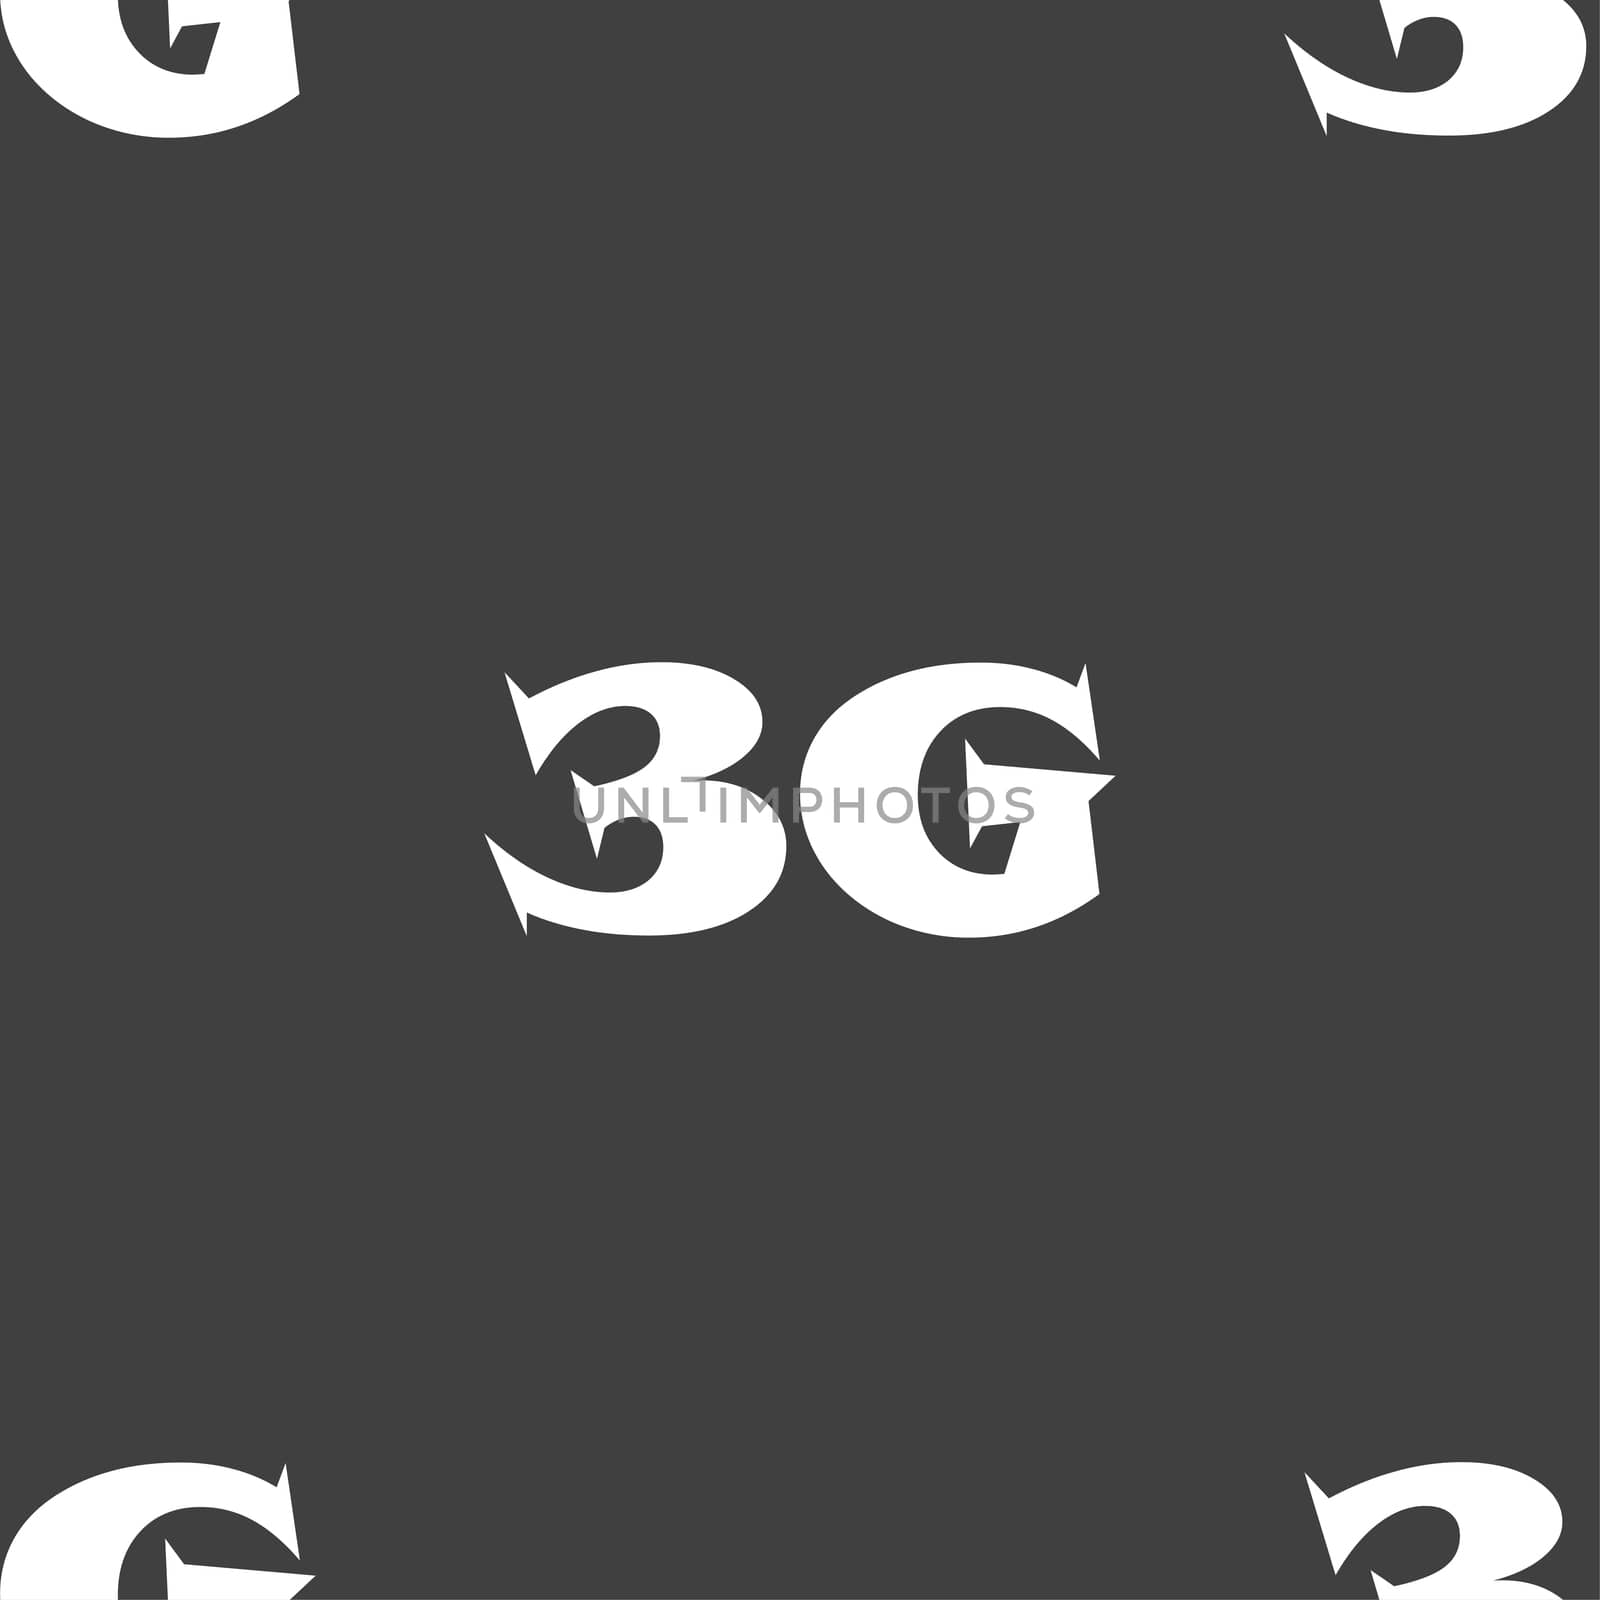 3G sign icon. Mobile telecommunications technology symbol. Seamless pattern on a gray background.  by serhii_lohvyniuk